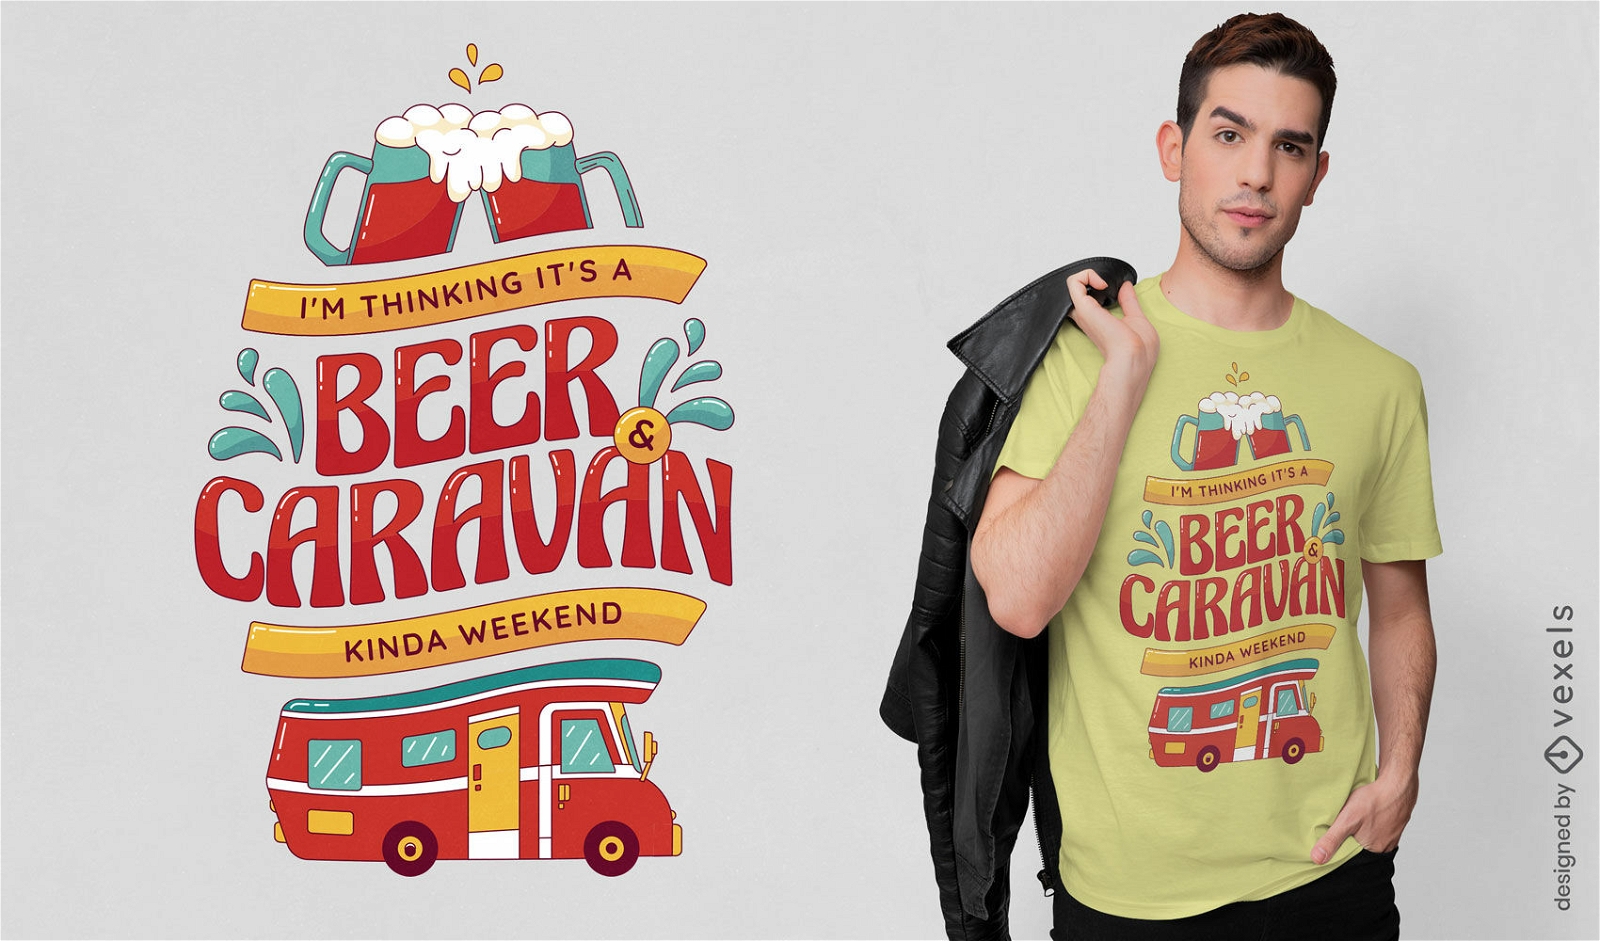 Caravan and beer t-shirt design